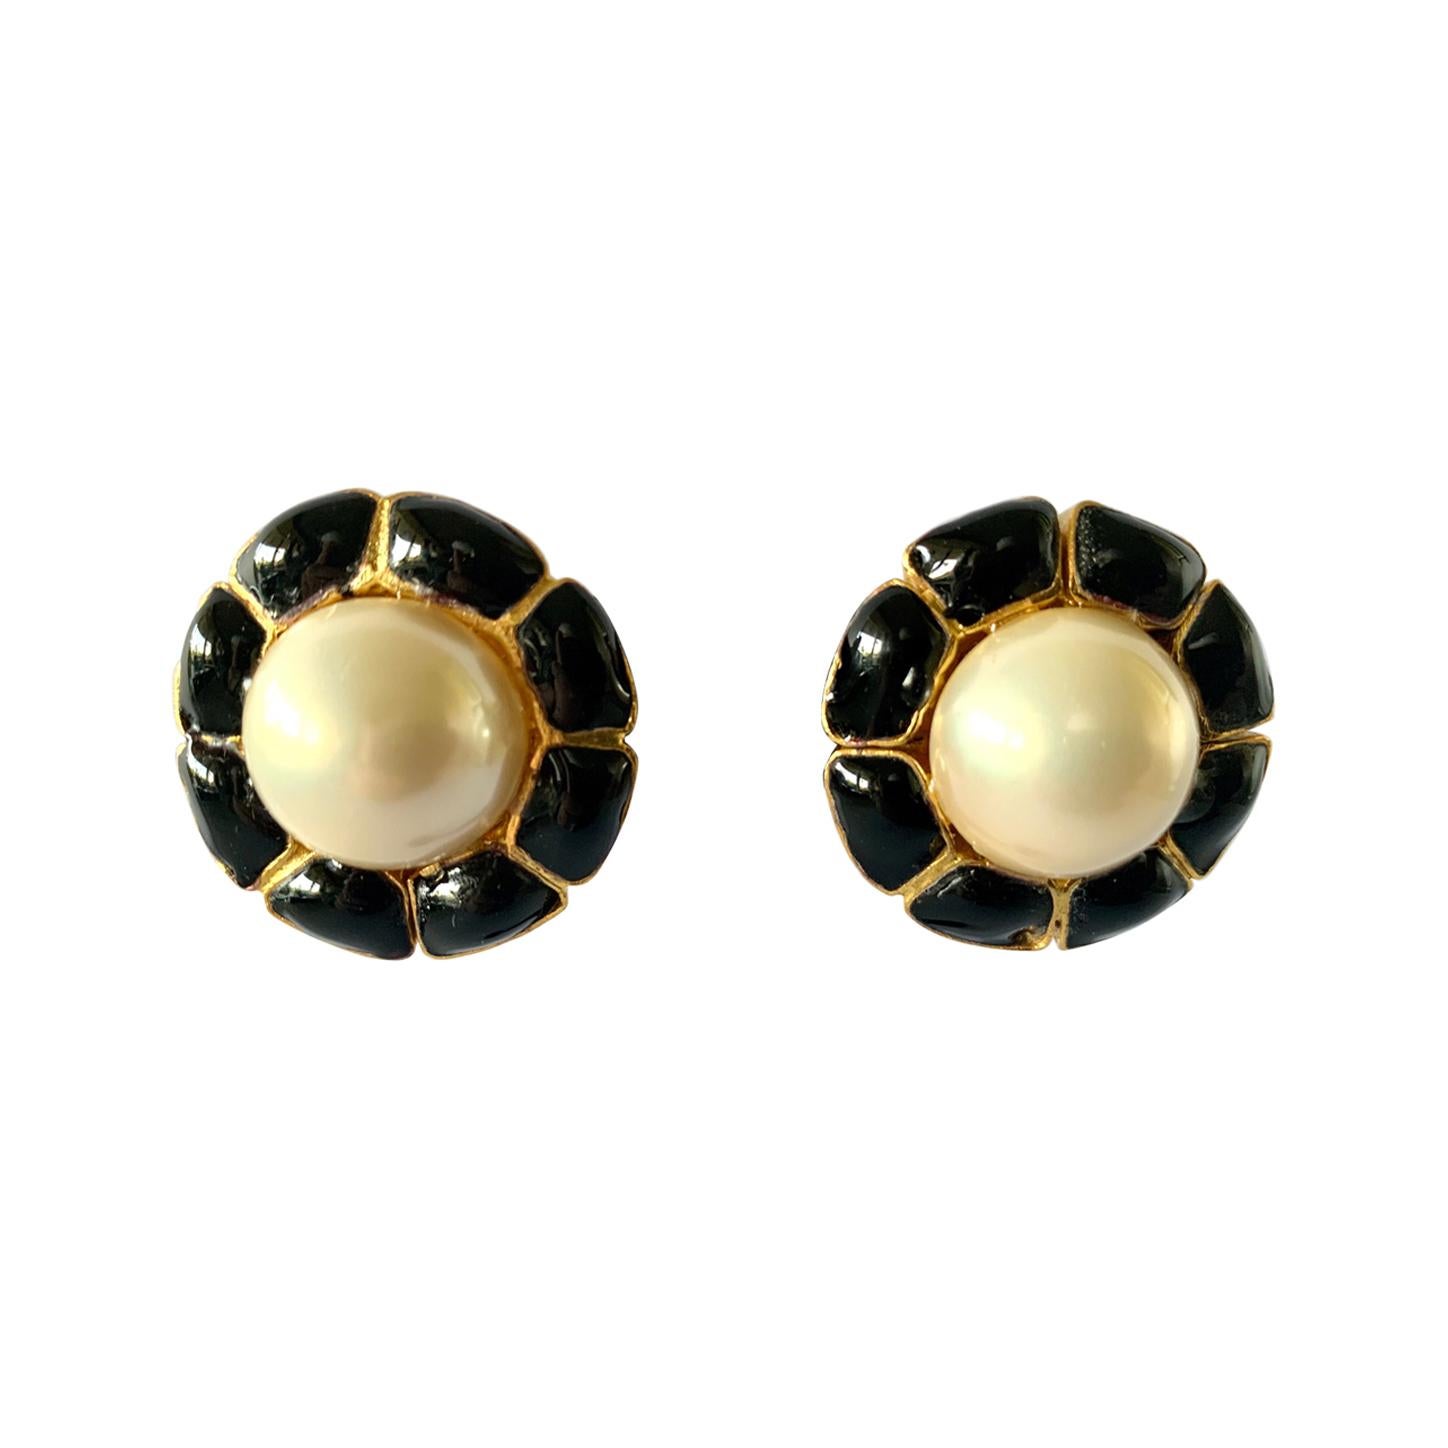 Vintage Chanel Black Flower and Pearl Earrings